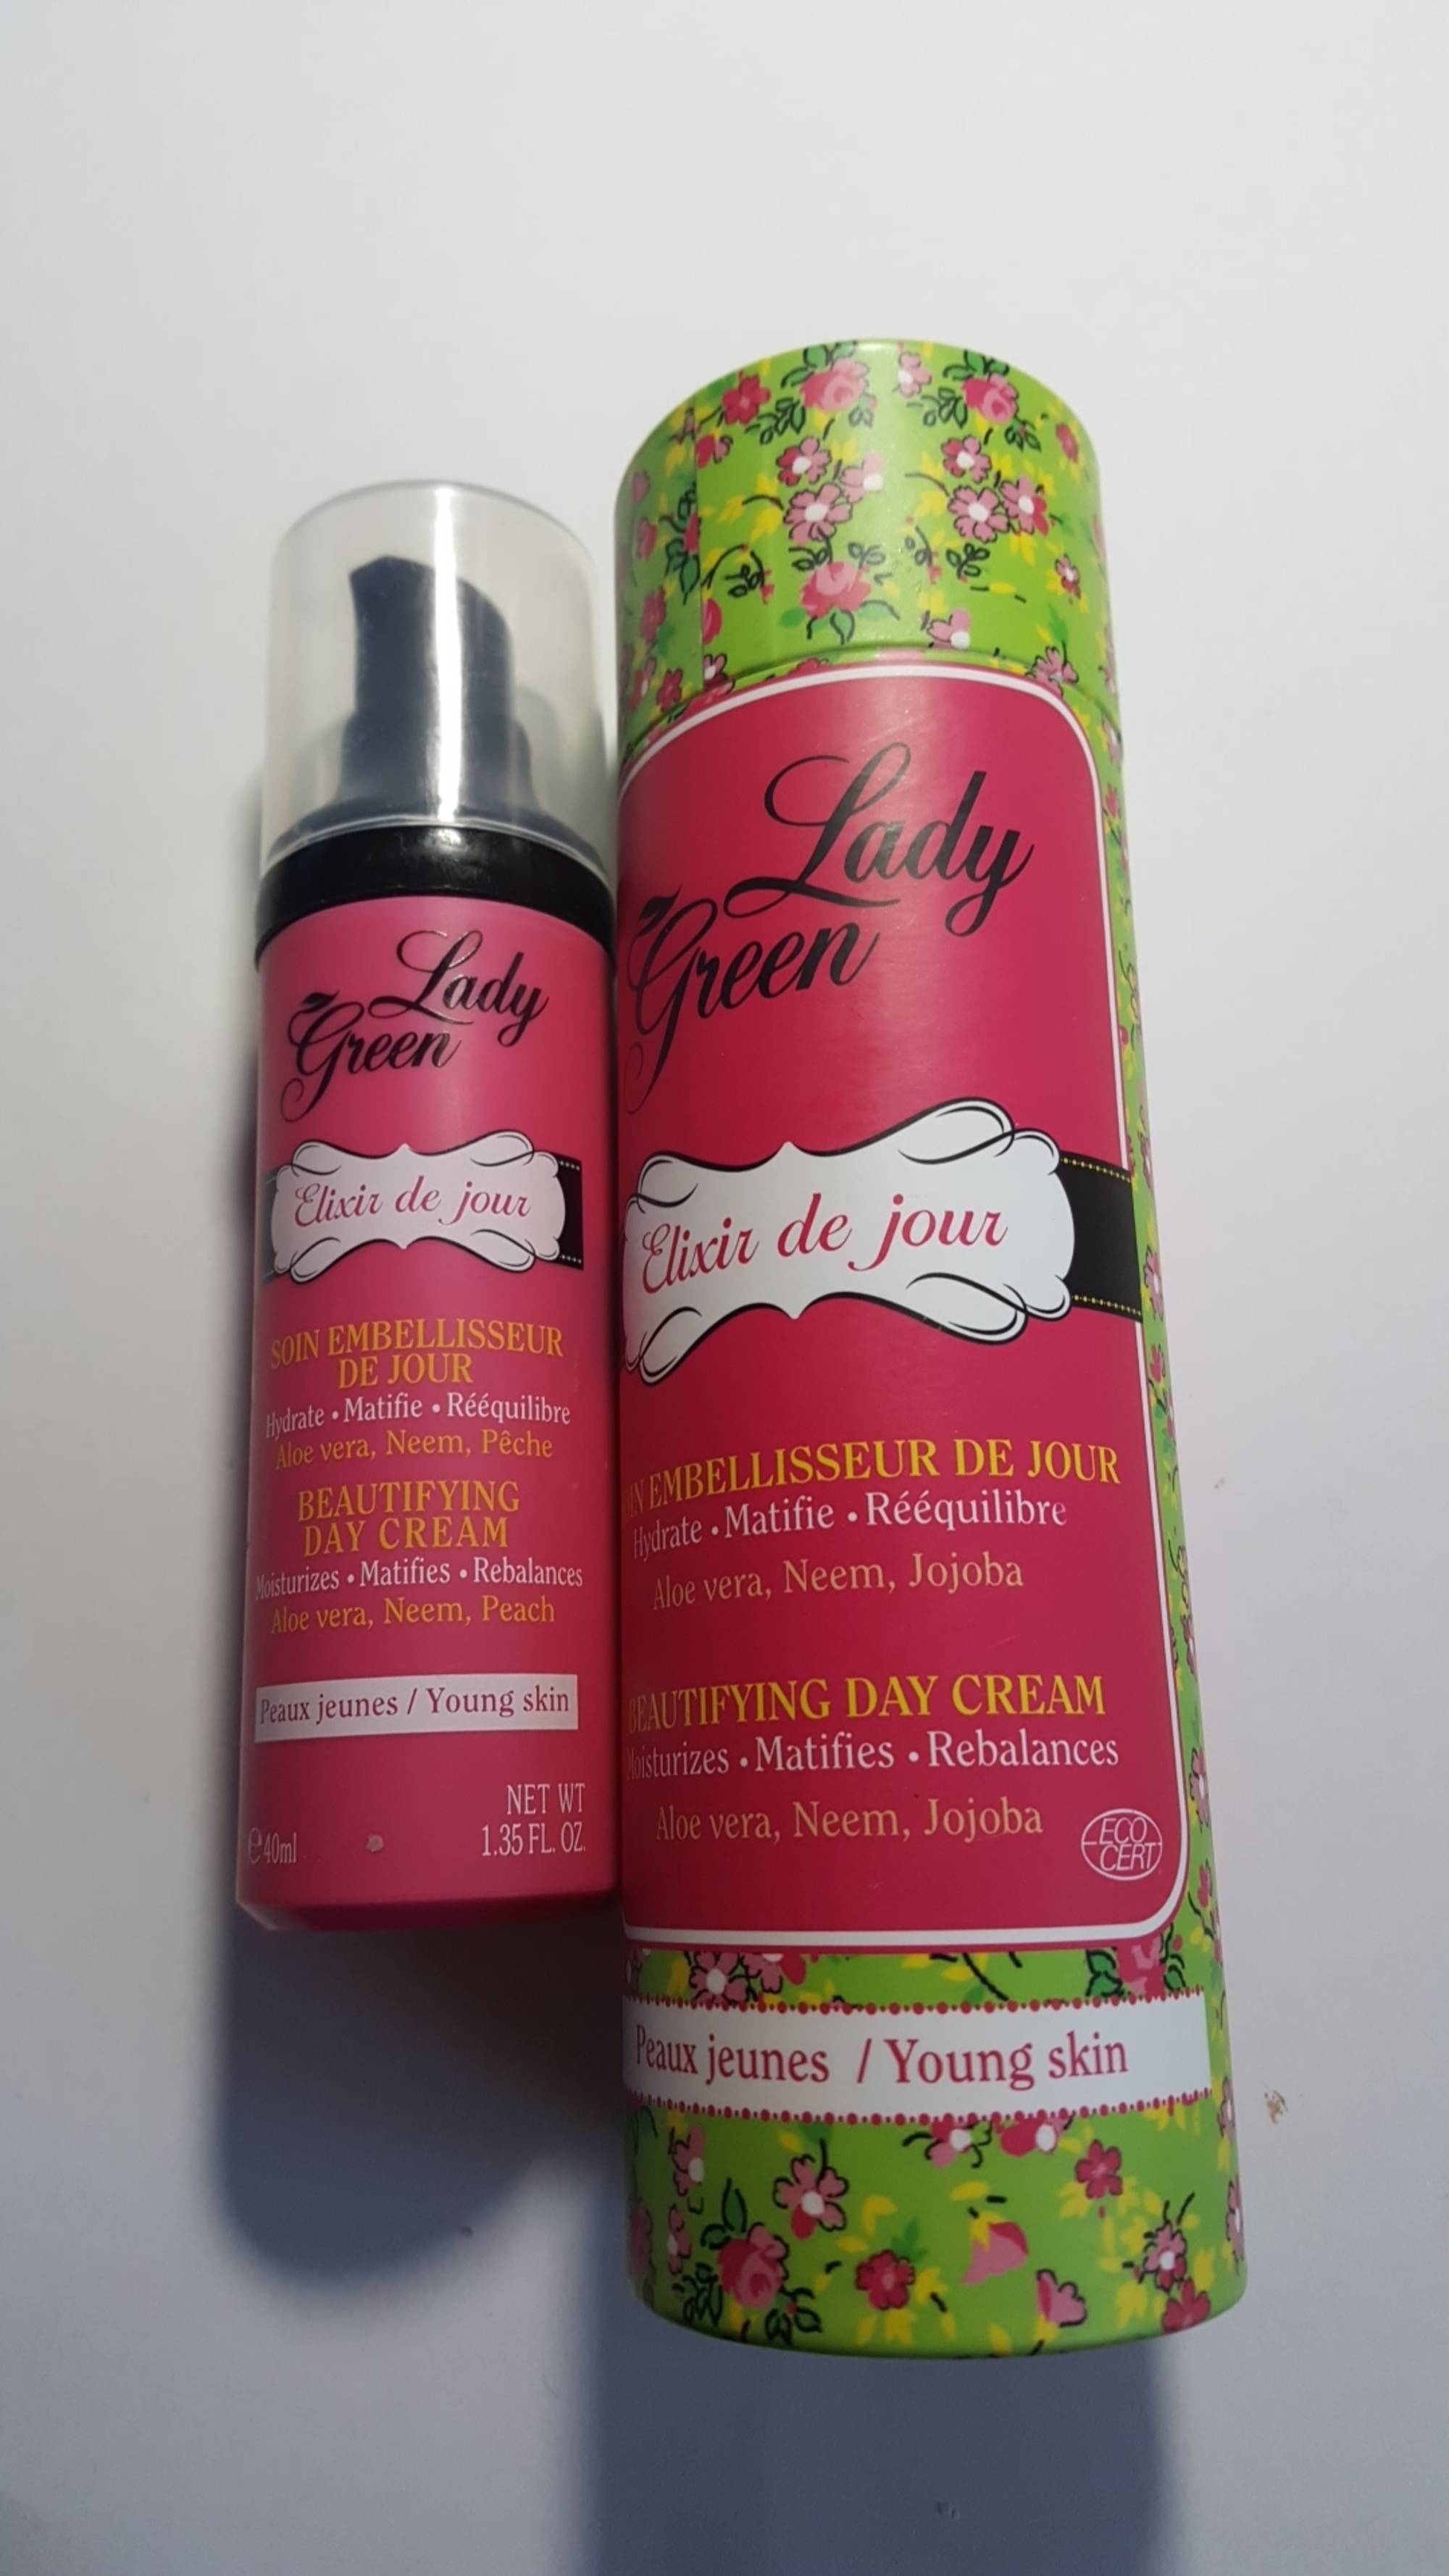 LADY GREEN - Elixir de jour - Soin embellisseur de jour